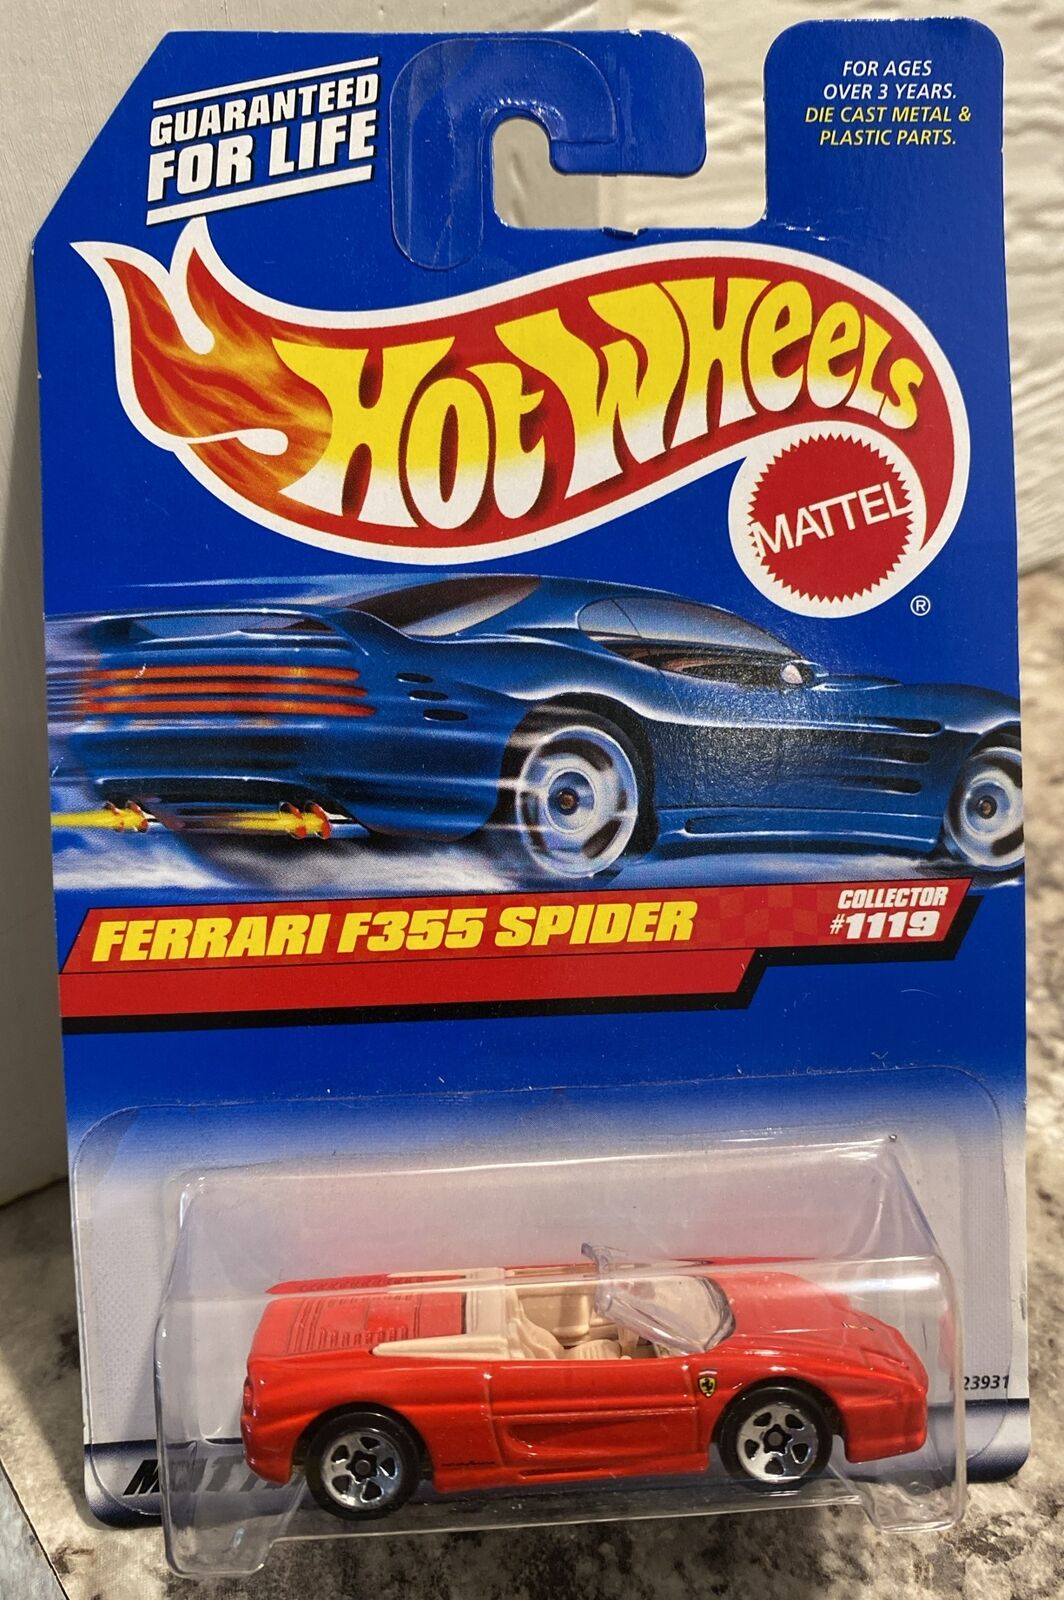 1999 Hot Wheels Ferrari F355 Spider • Metal Base • Base Card #1119